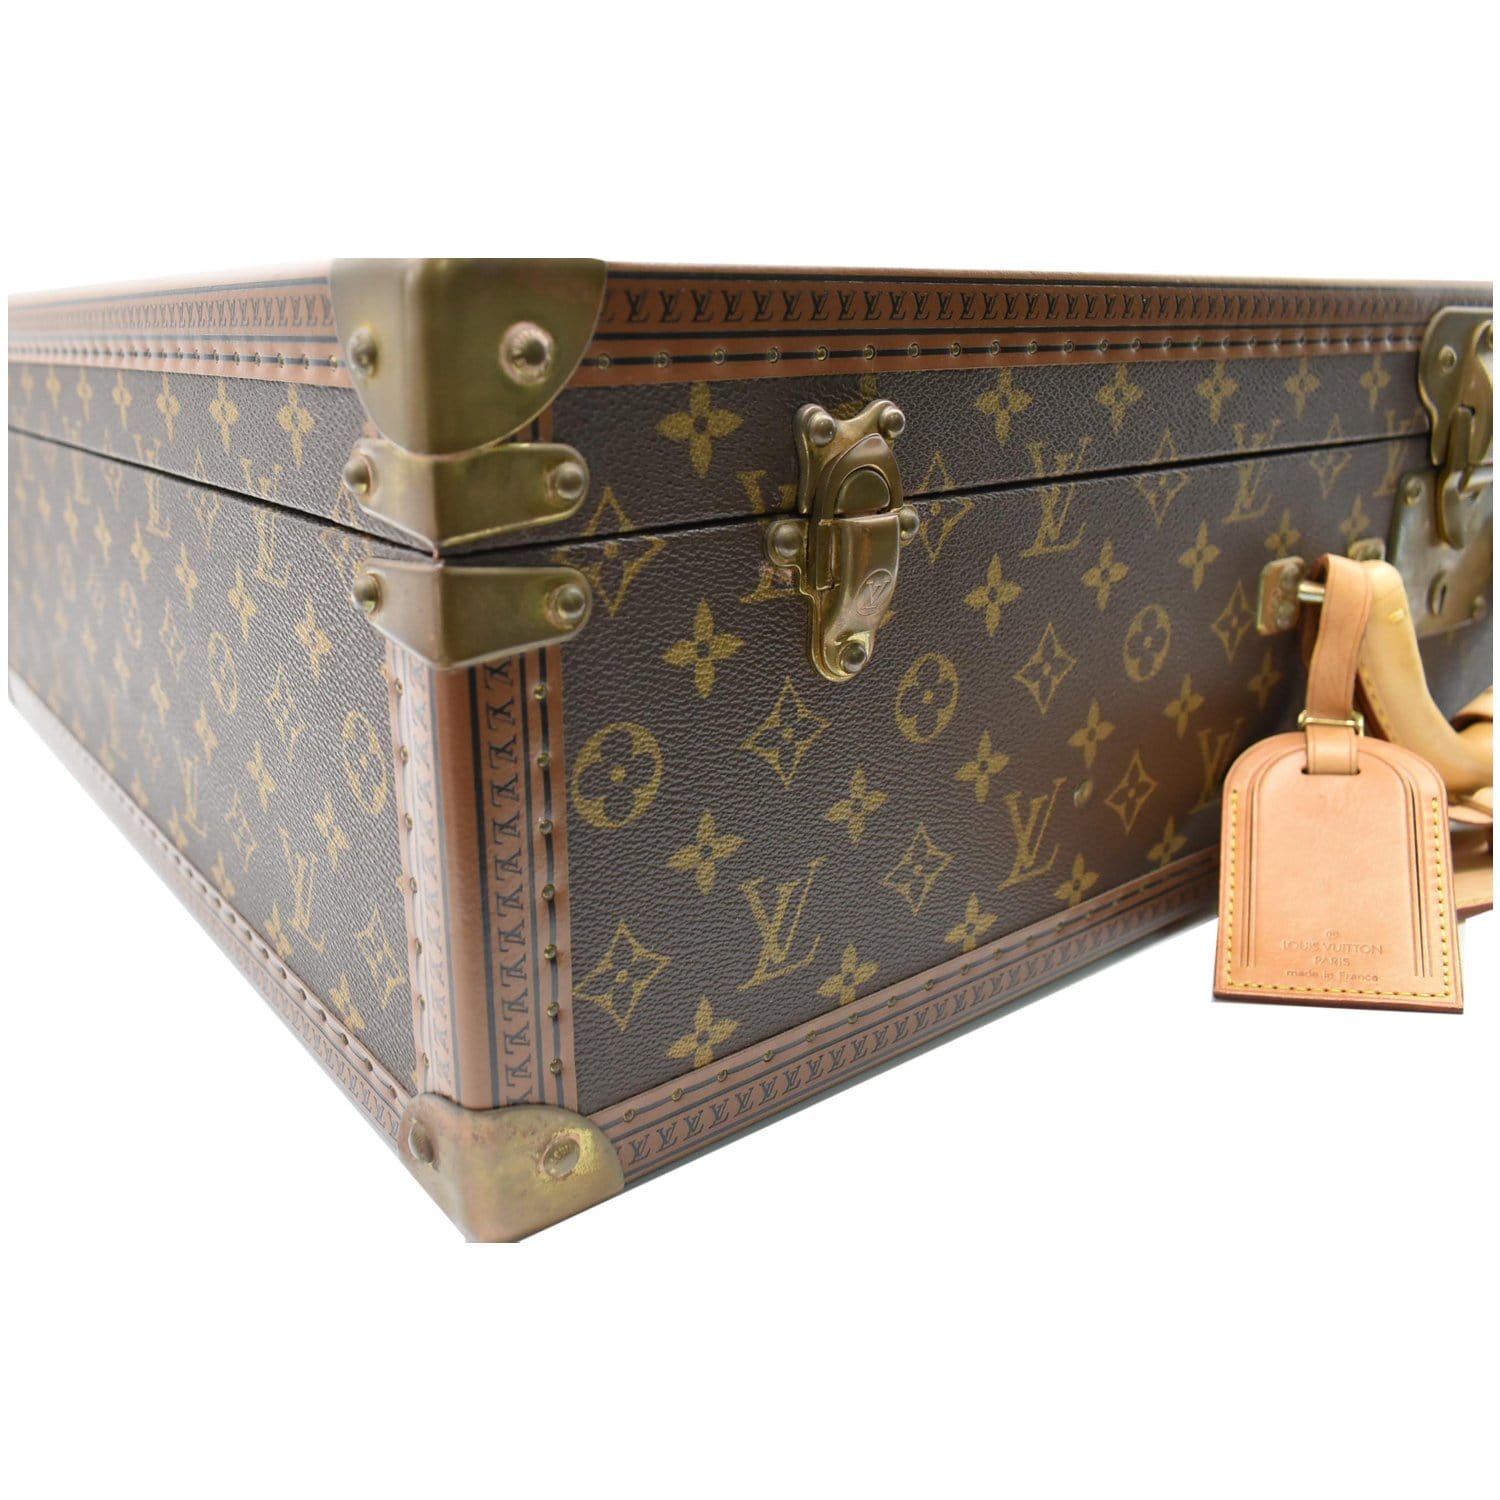 Louis Vuitton Bisten 70 Monogram Canvas Suitcase in Antique